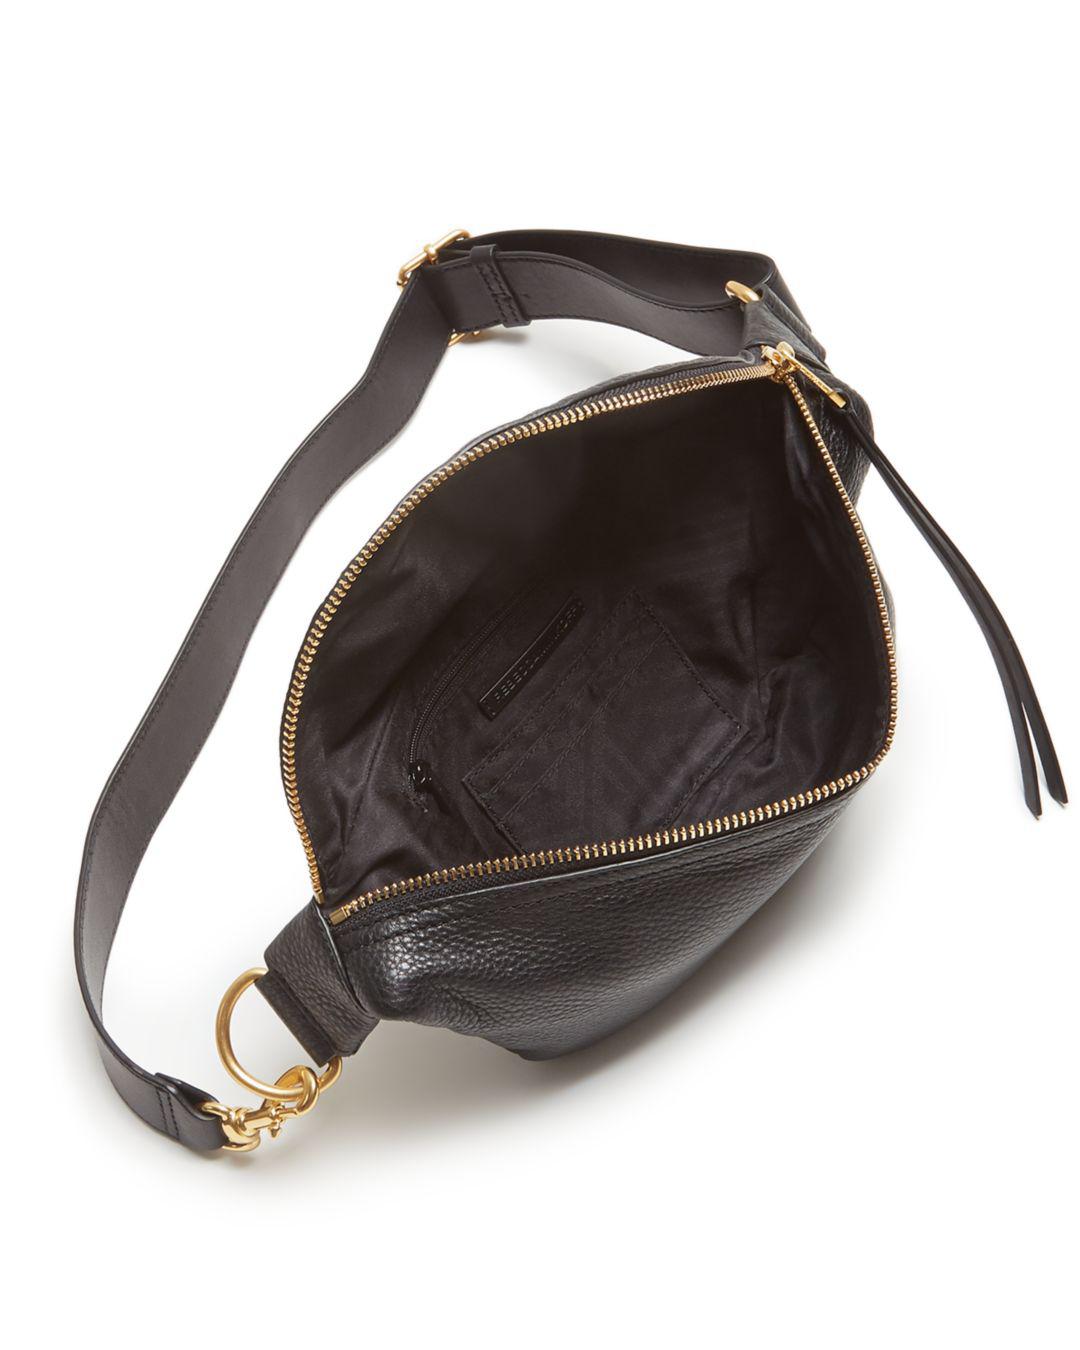 Rebecca Minkoff Bree Leather Belt Bag in Black/Gold (Black) - Lyst